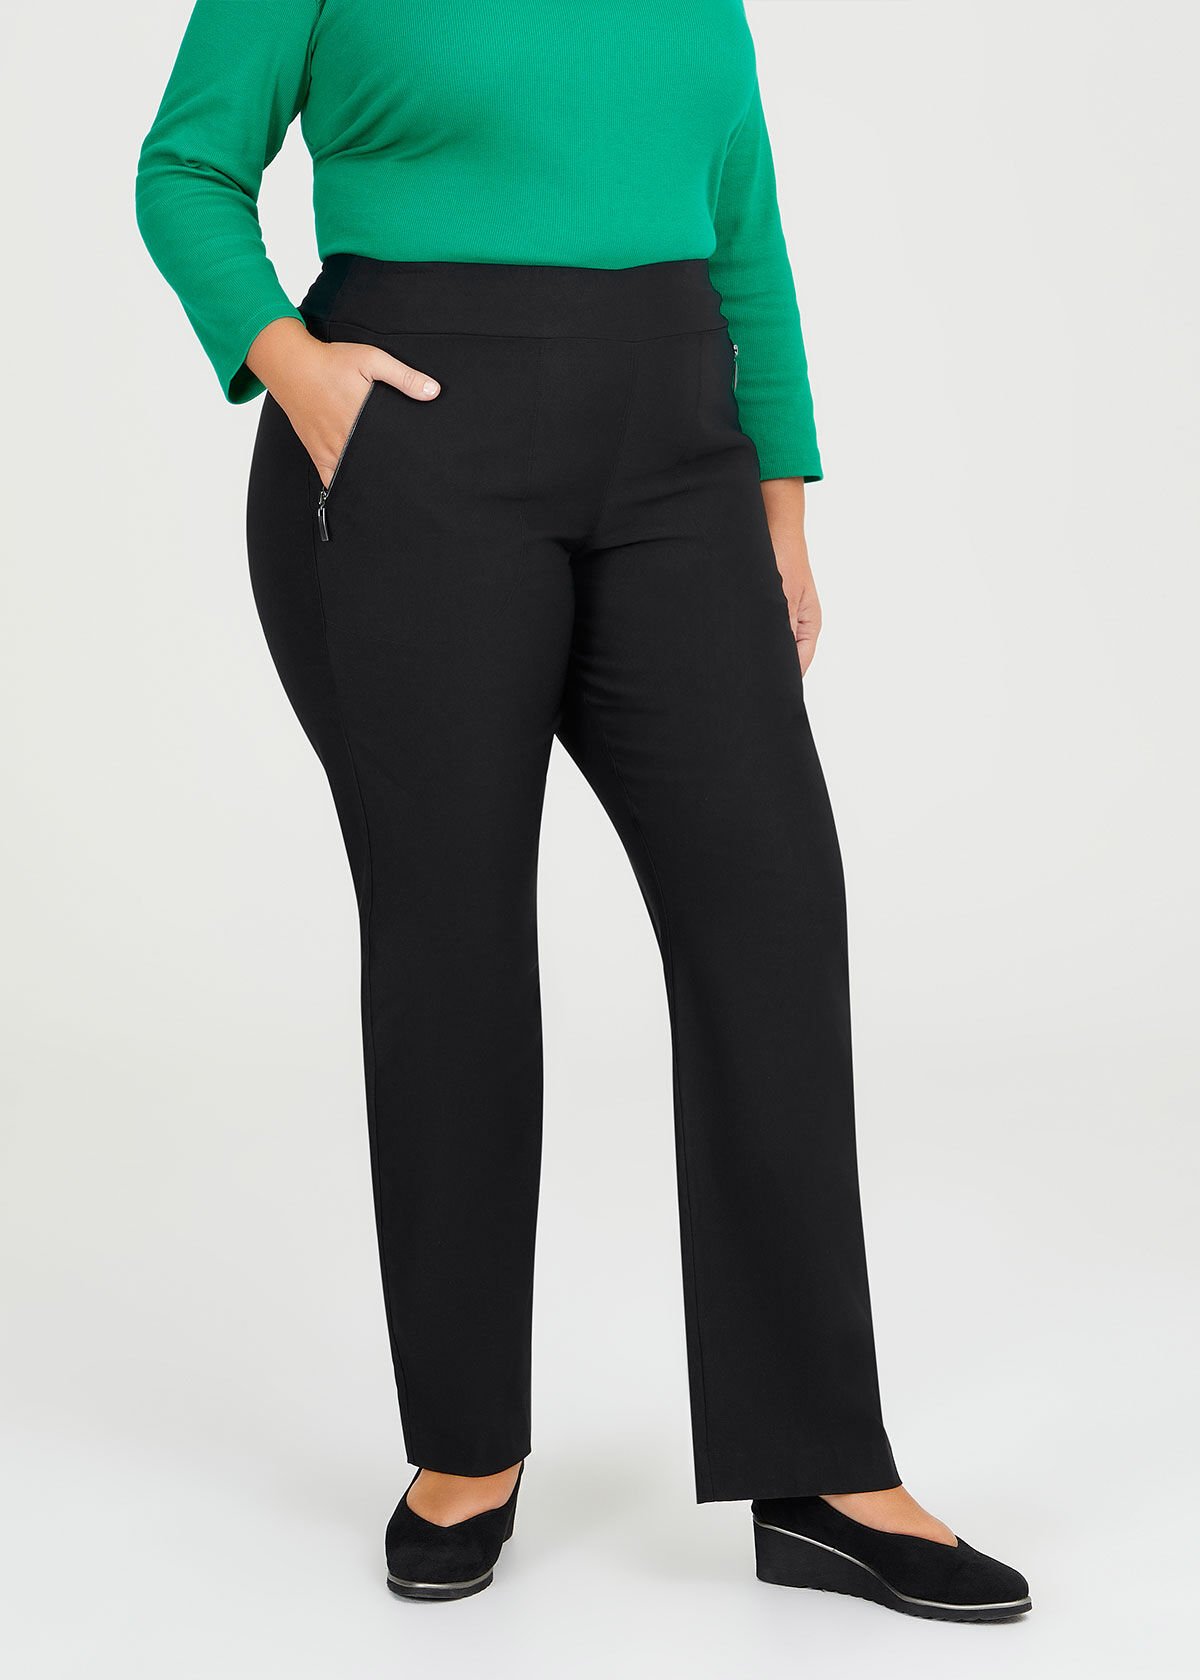 QUYUON Work Pants for Women Discount Fashion Plus Size Drawstring Casual  Solid Elastic Waist Pocket Loose Pants Dress Pants Women Long Pant Leg  Length Activewear Style P3346 Navy XL - Walmart.com